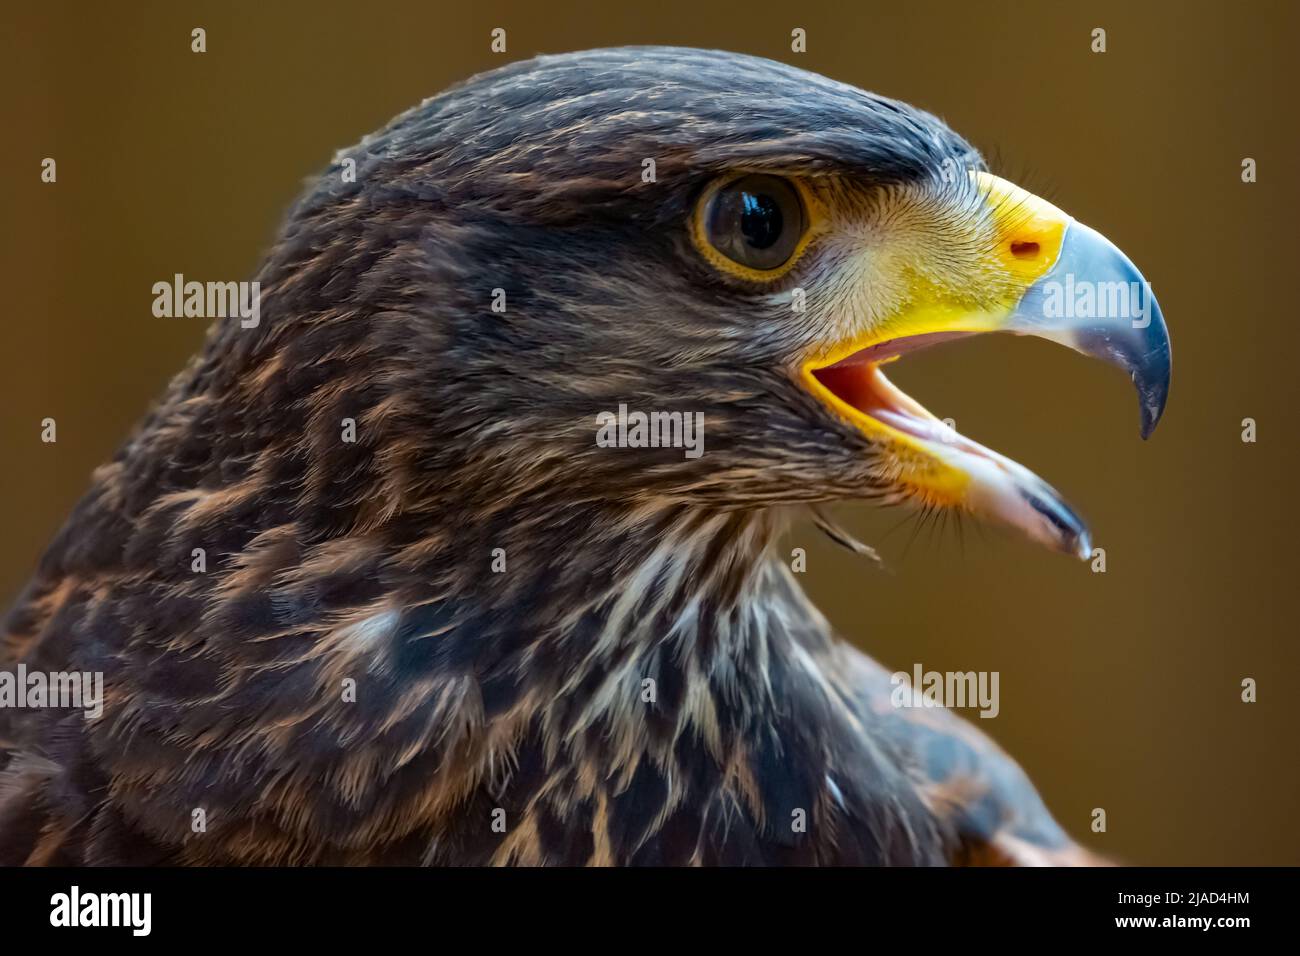 Close-up portrait of a Golden Eagle, British Columbia, Canada Stock Photo